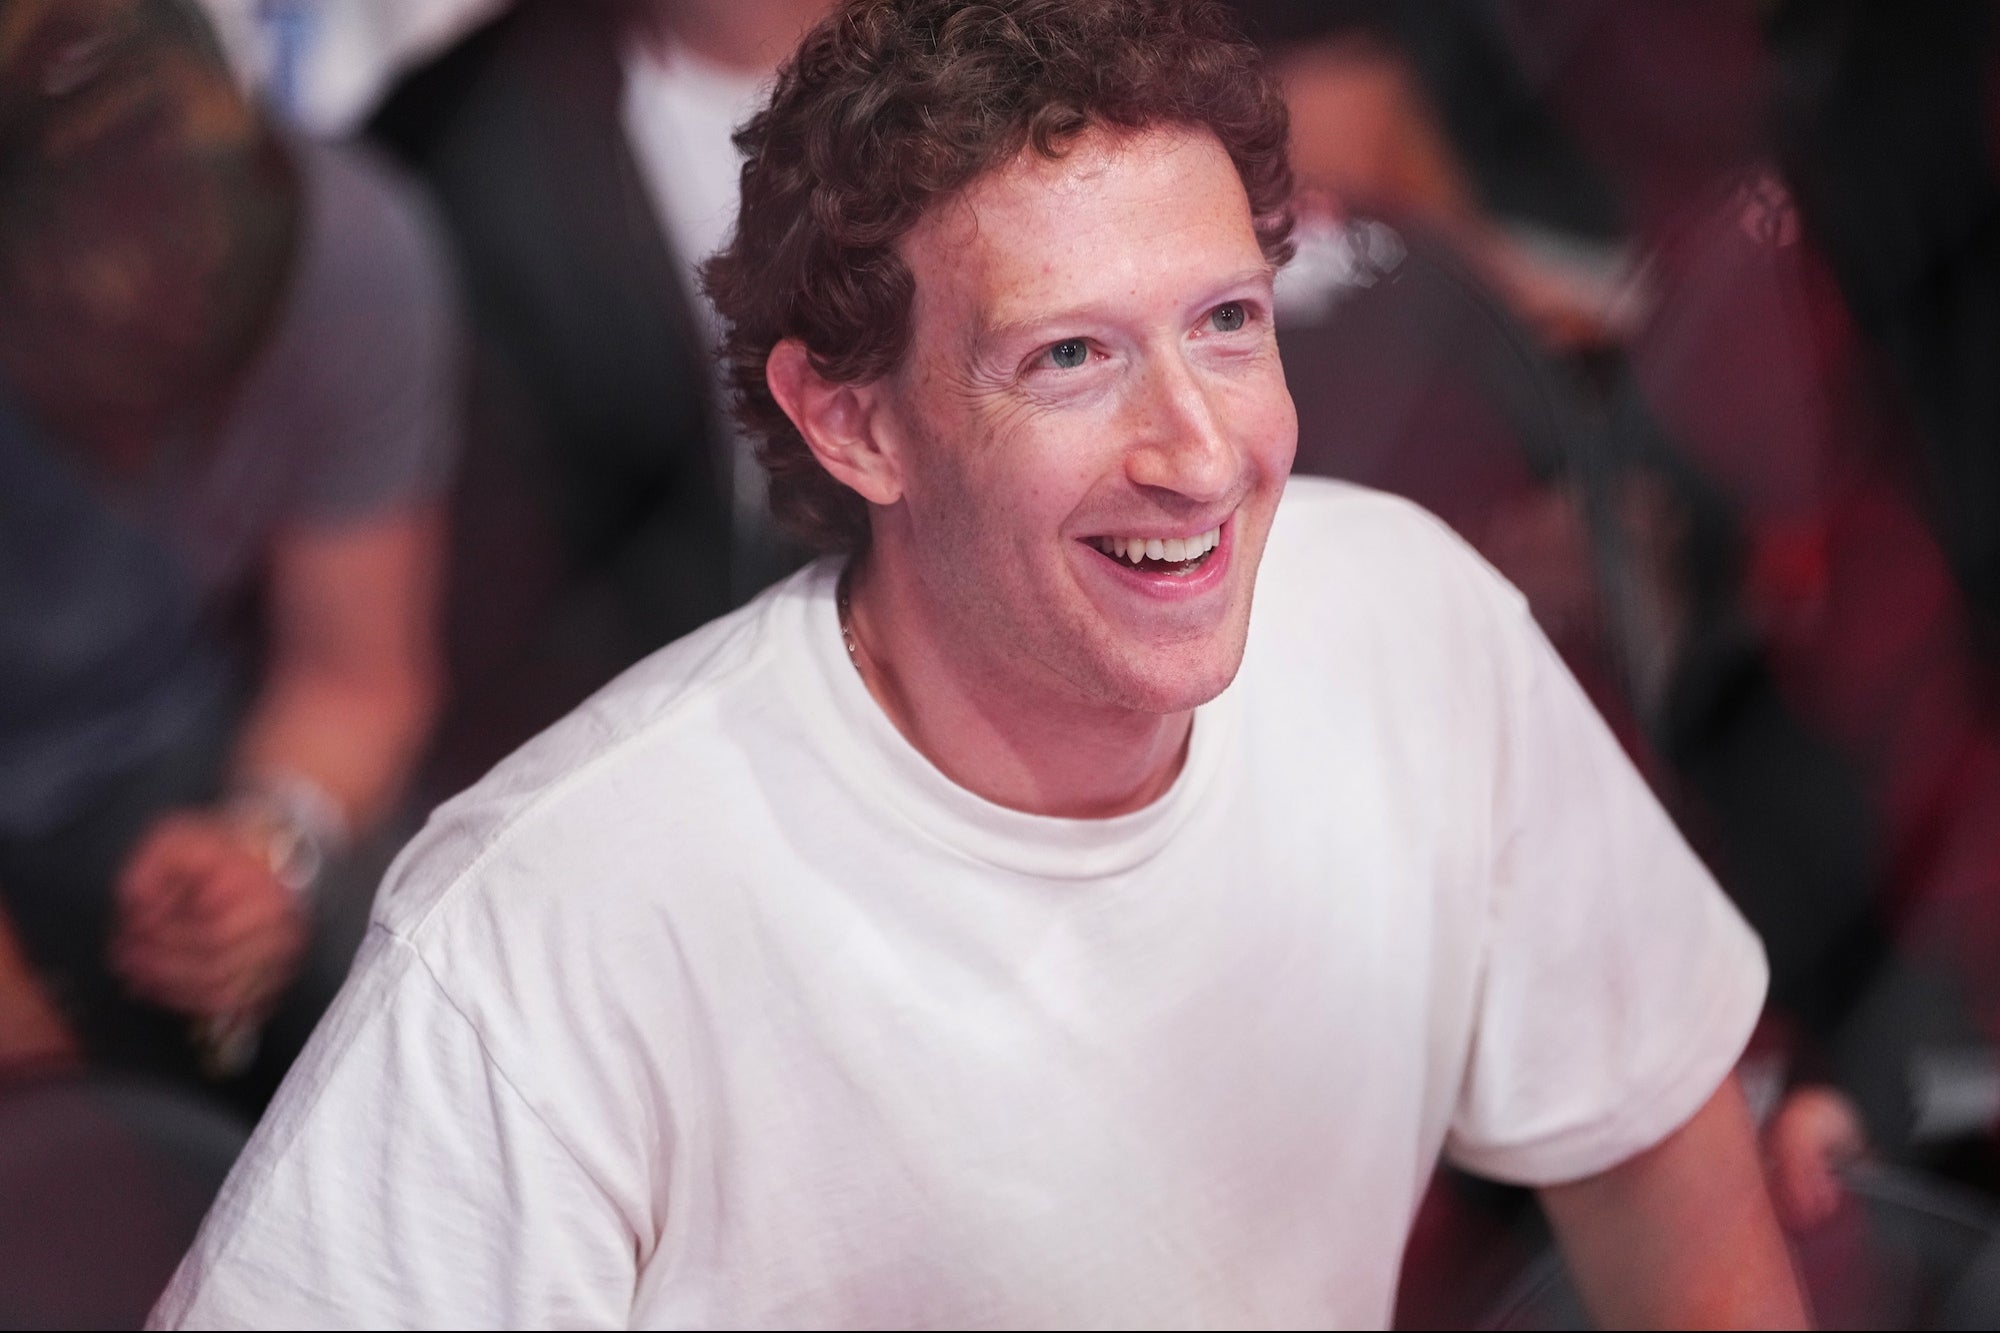 Mark Zuckerberg Reveals the Future Meta AI, Tech Industry [Video]